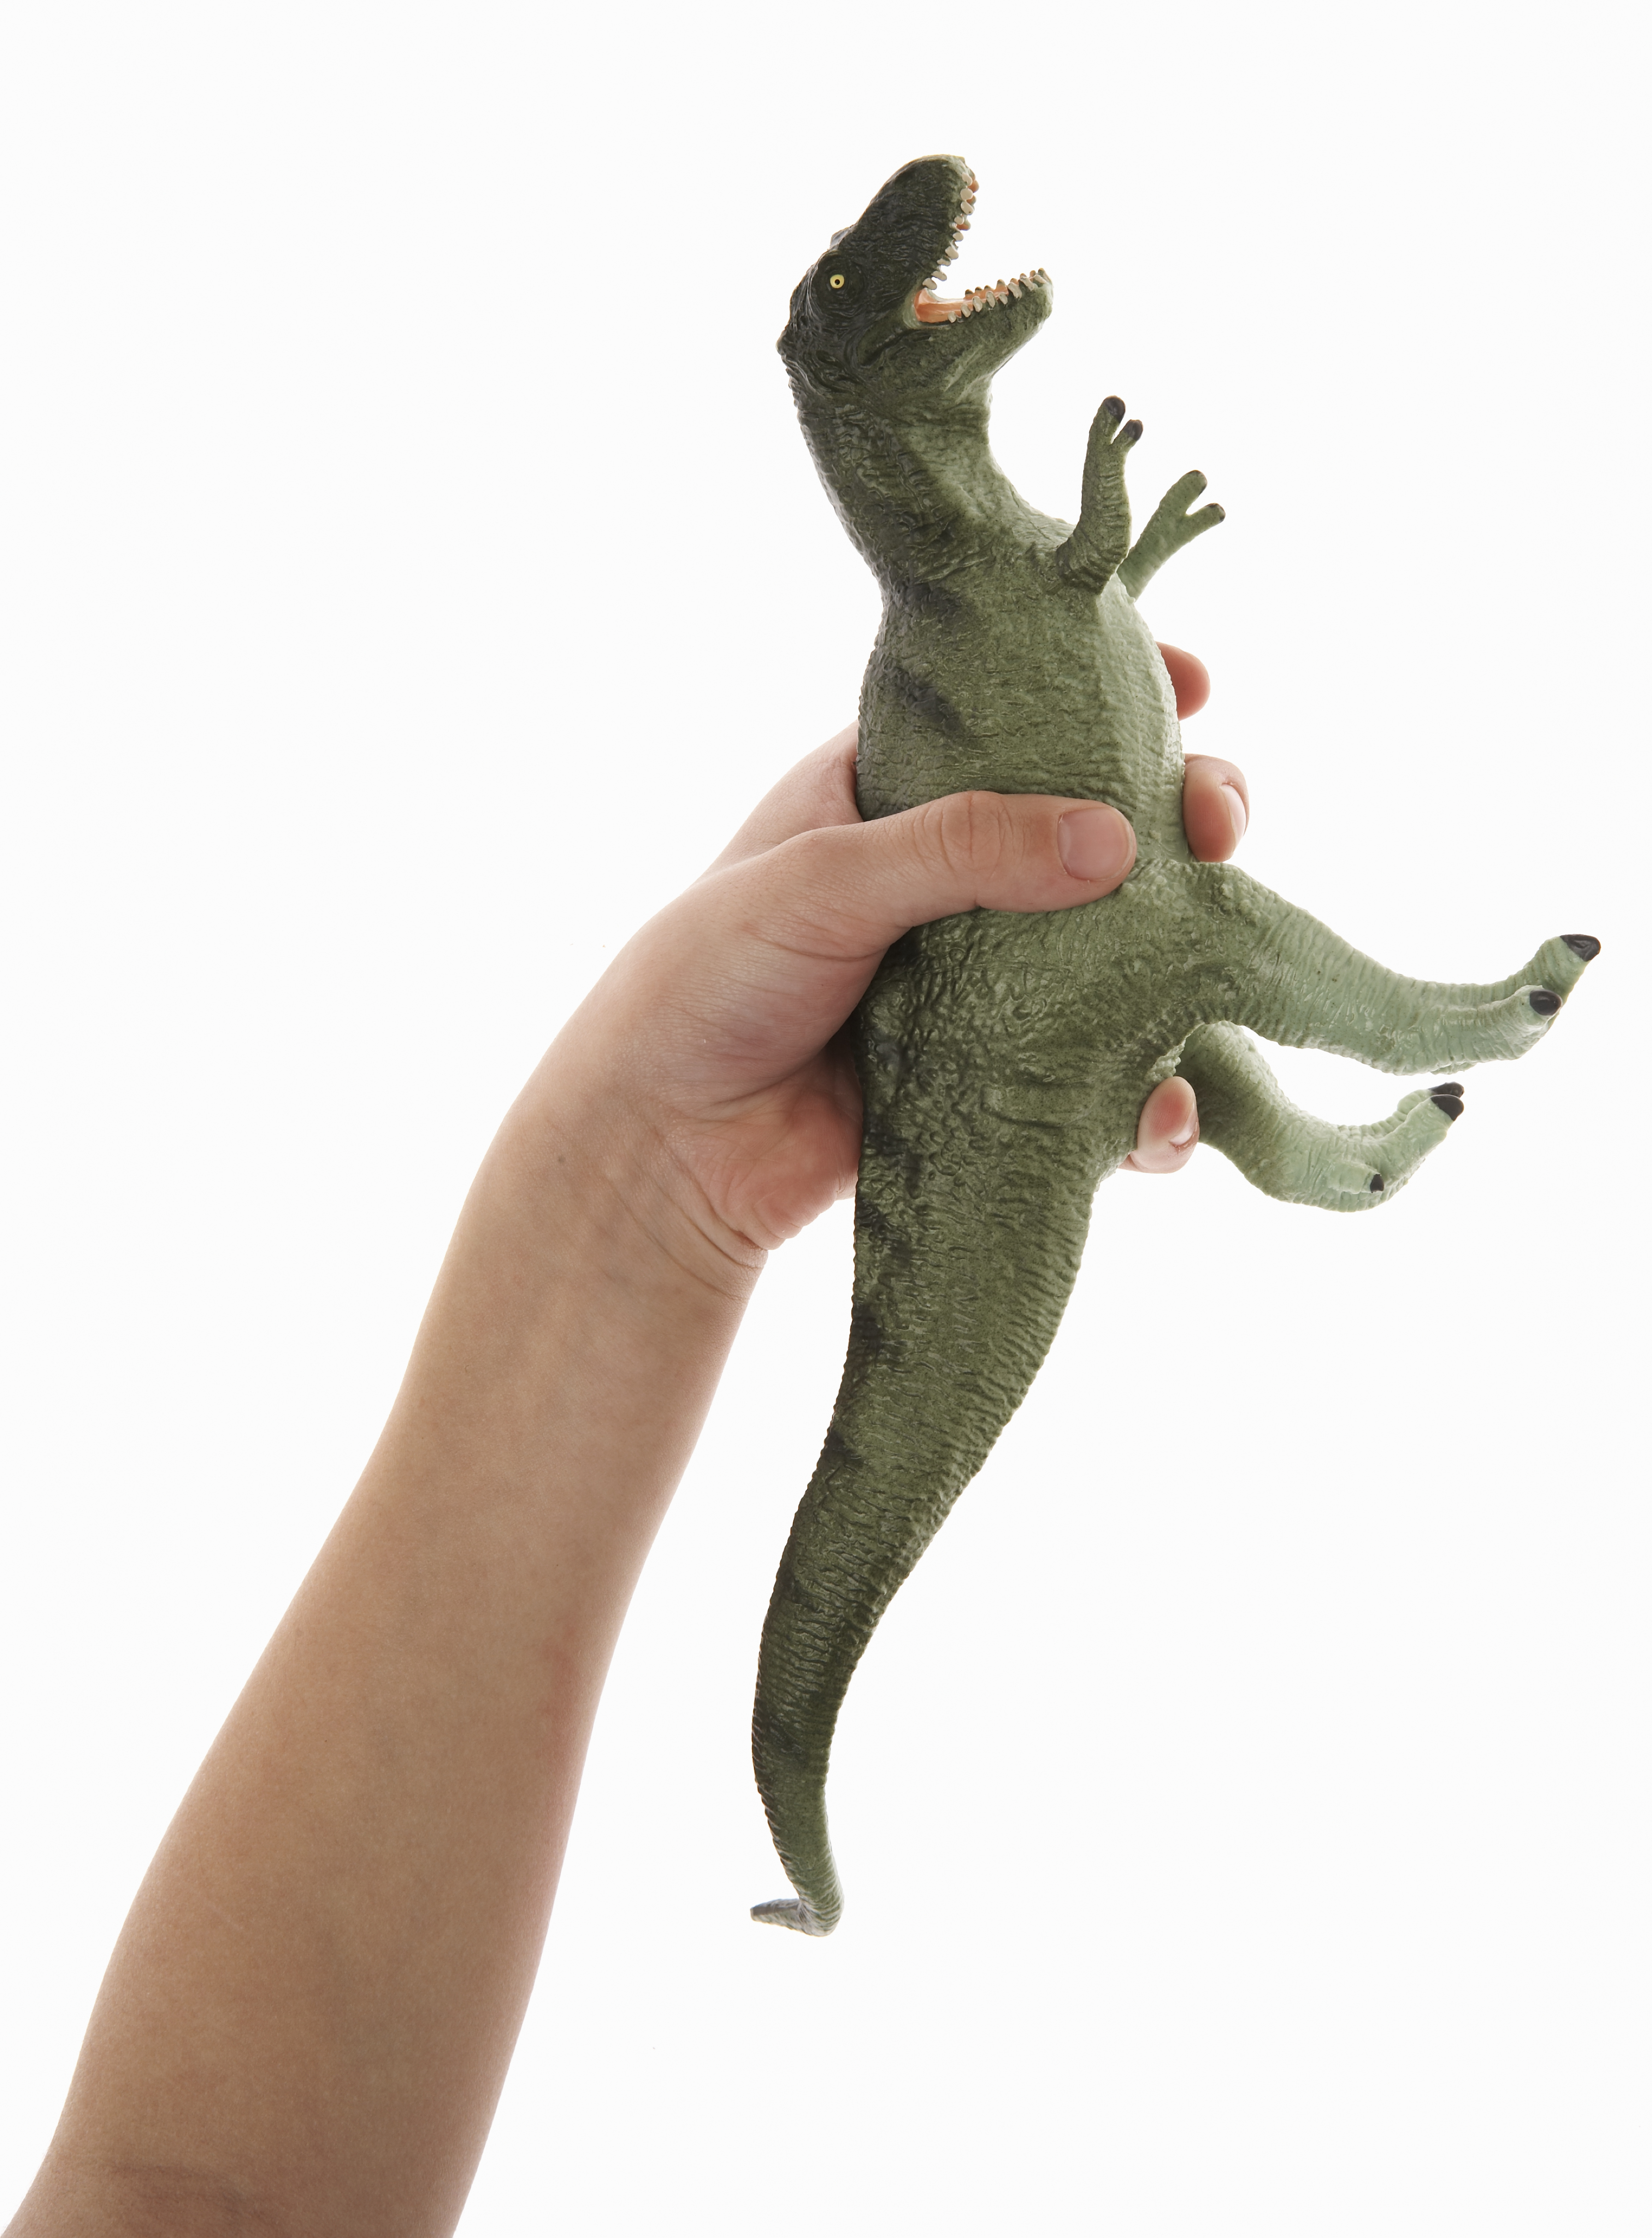 Hand holding a model of a Tyrannosaurus Rex